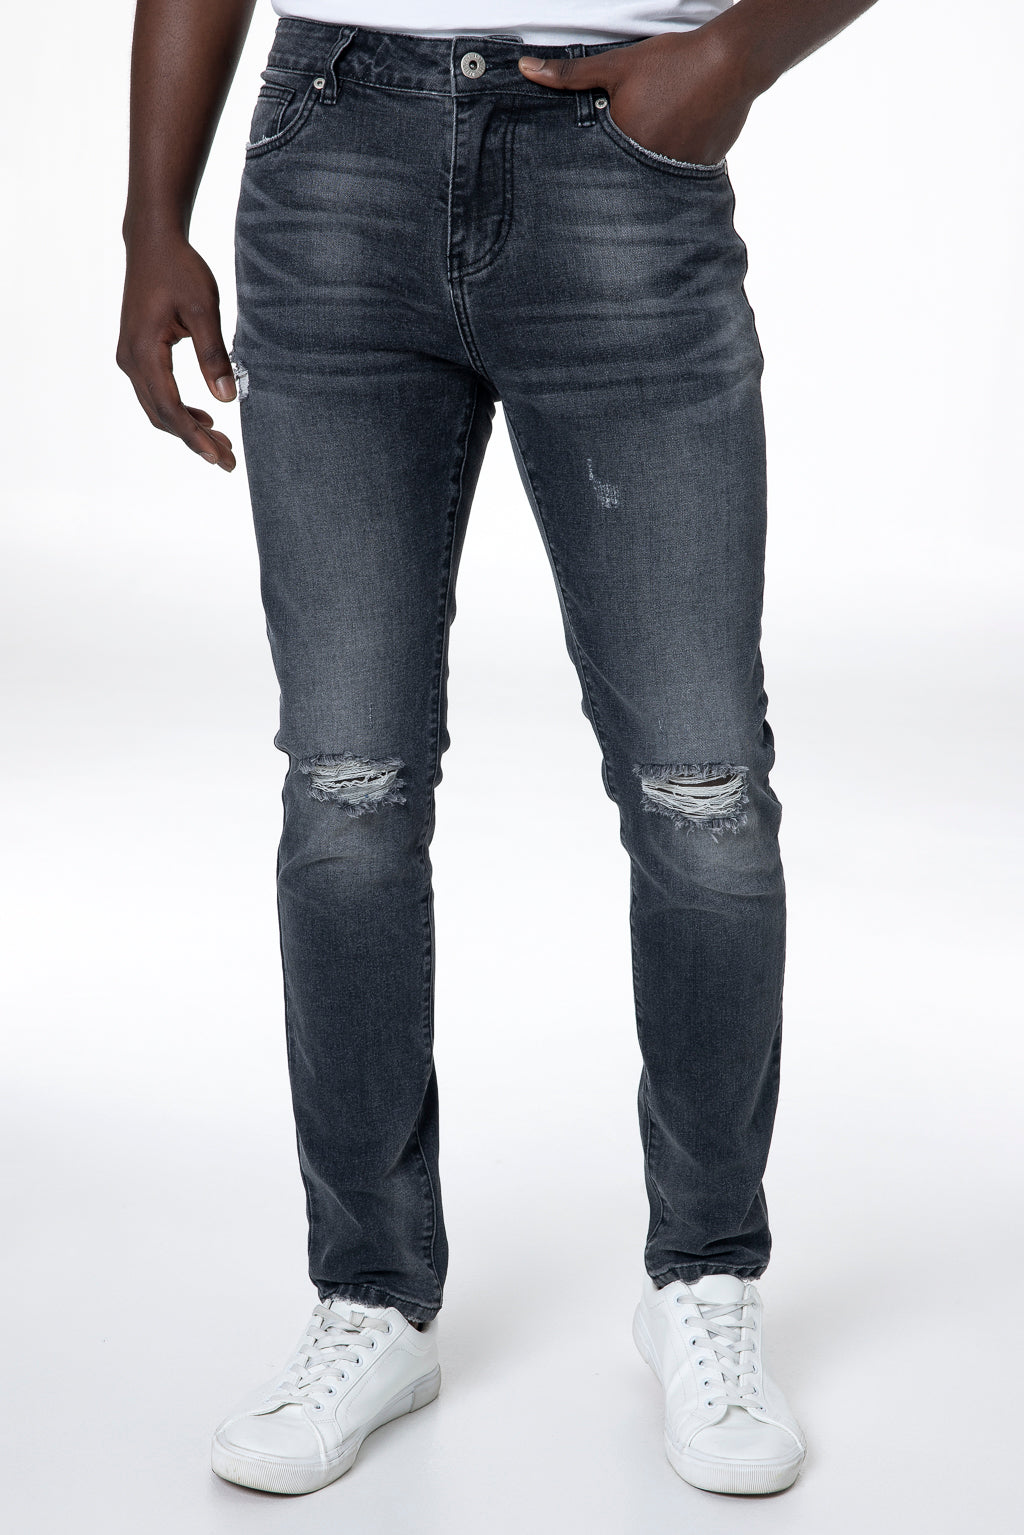 Rf02 Ripped Skinny Jeans _ 142681 _ Black Wash